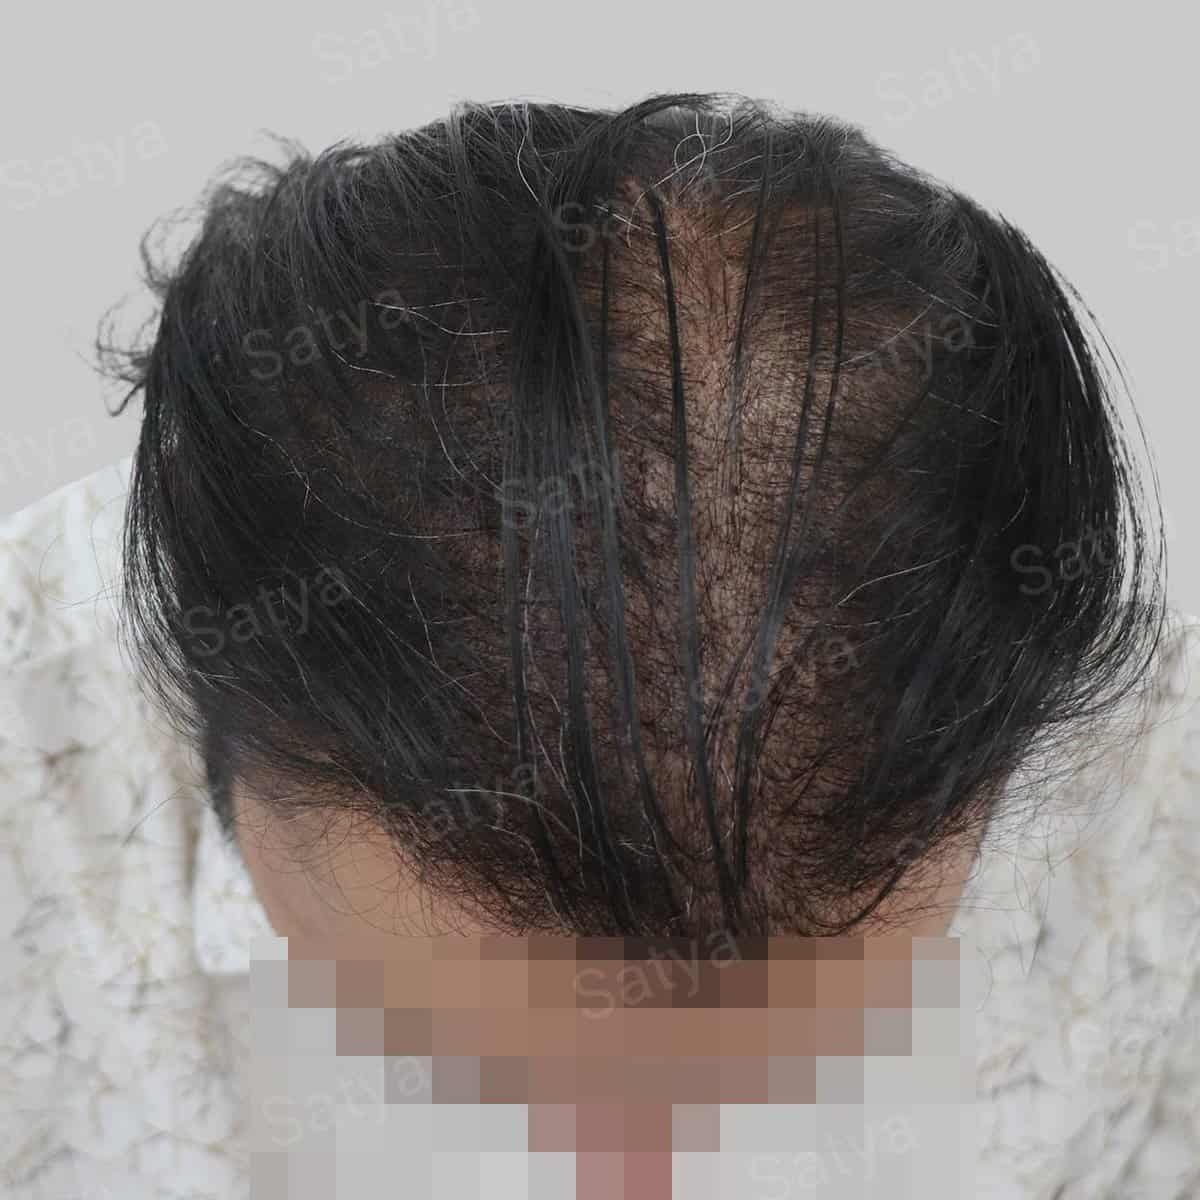 Best Hair Transplant Clinic in Delhi – India | Satya hair solutions